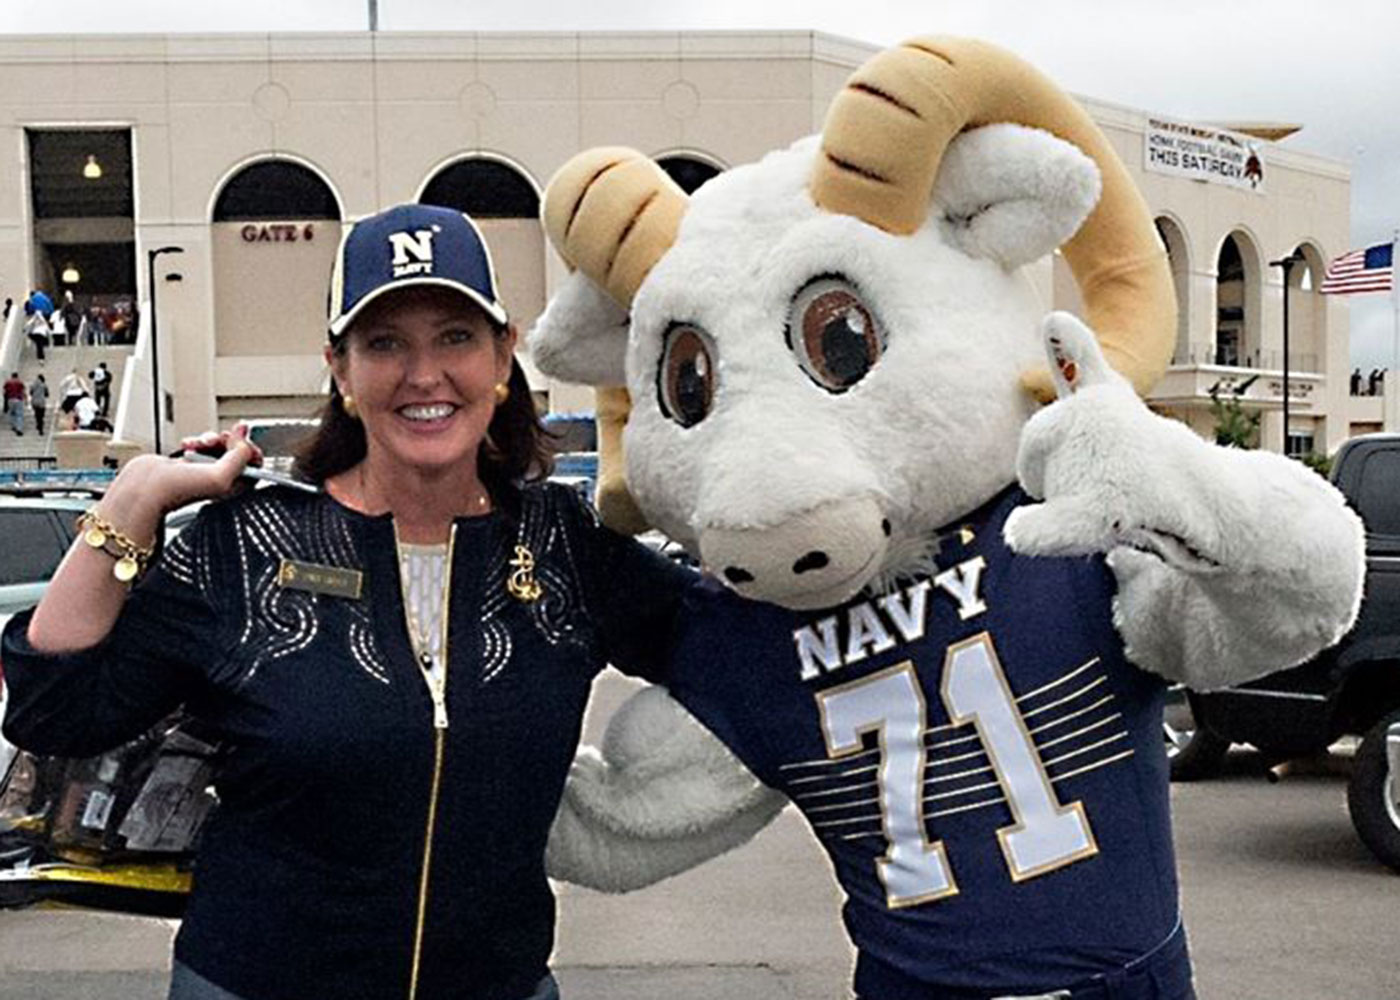 Photo of Lynda Carter posing with U.S. Naval Academy mascot Bill the Goat